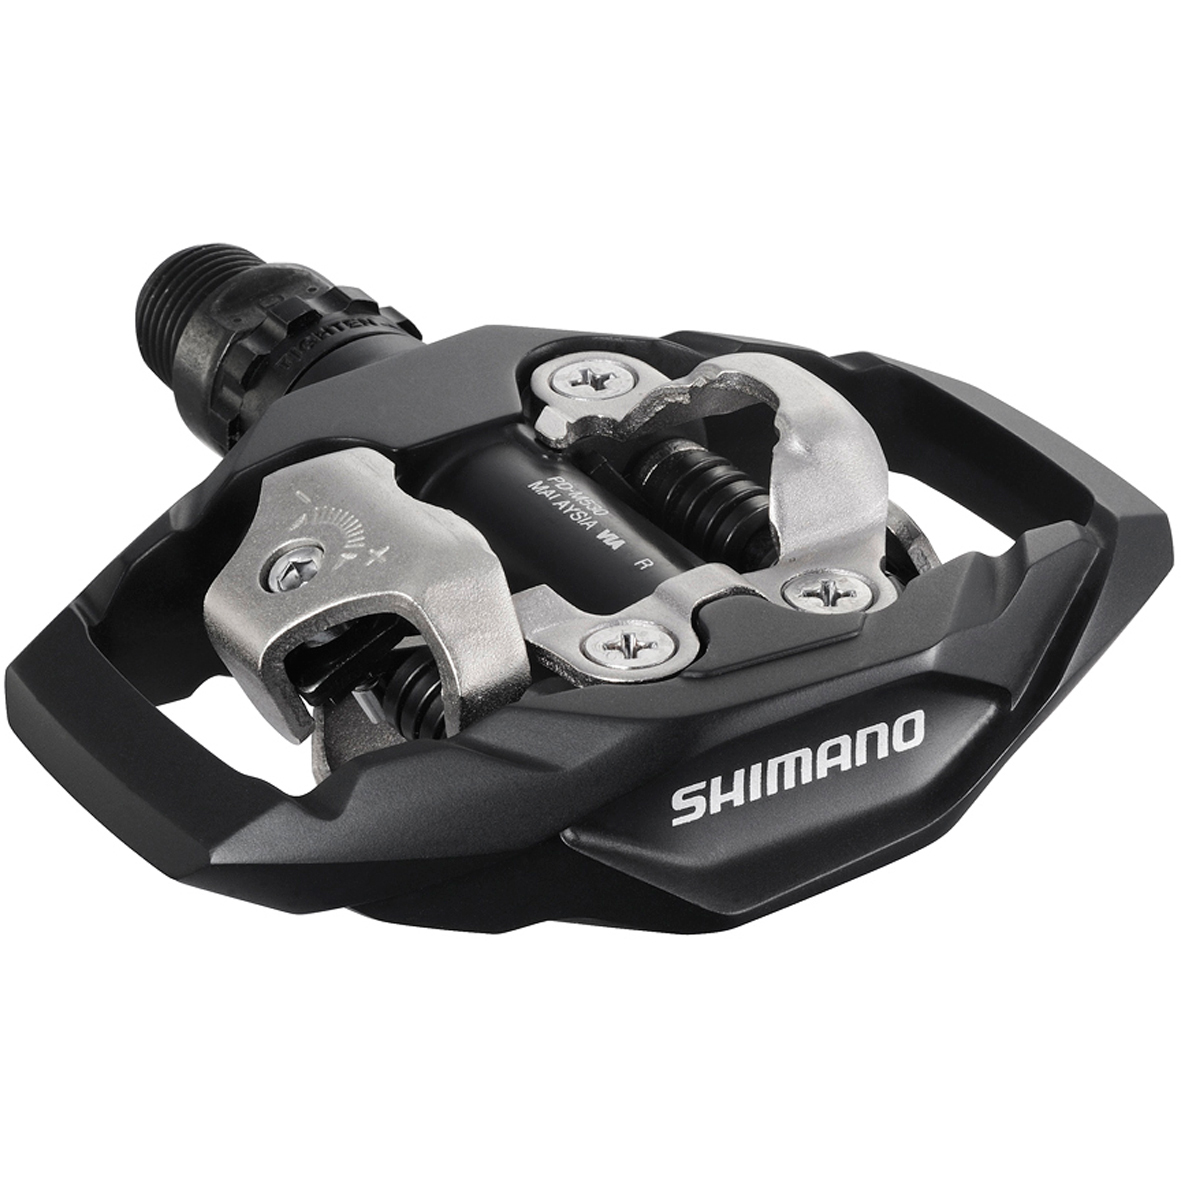 Shimano M530 MTB SPD Trail Pedals shimano m530 mtb spd trail pedals